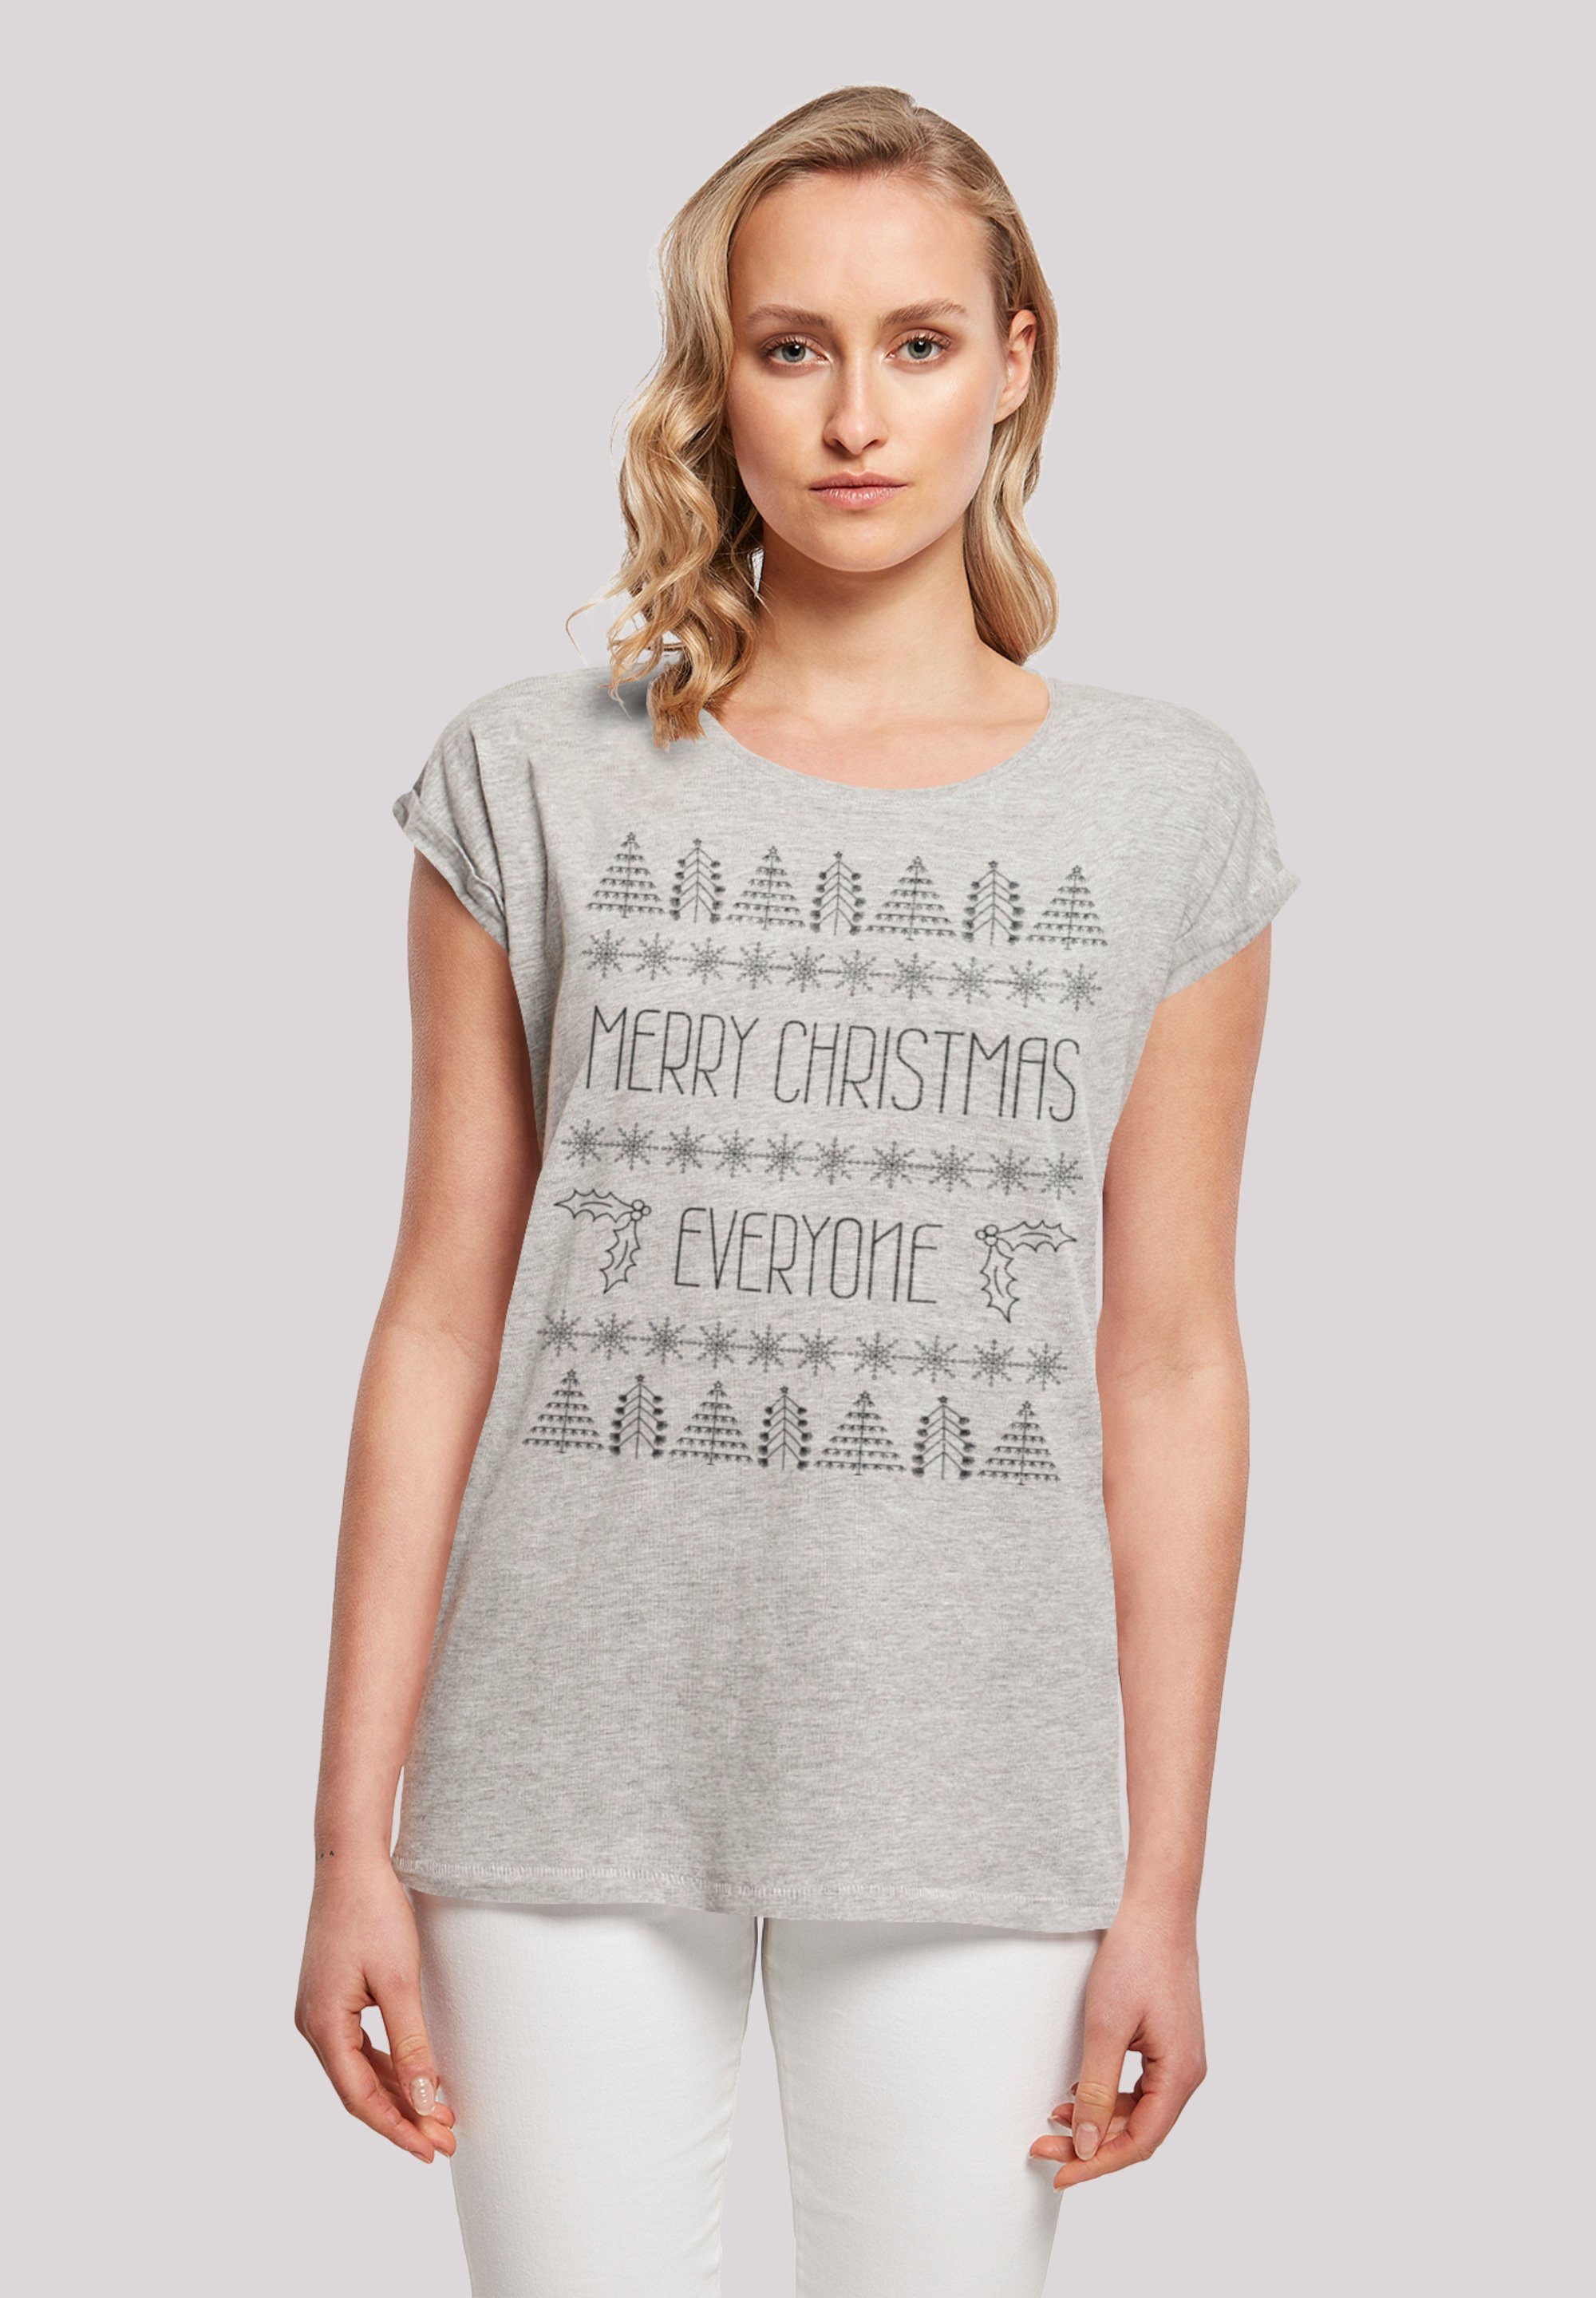 Christmas T-Shirt grey Print Weihnachten Merry F4NT4STIC Everyone heather